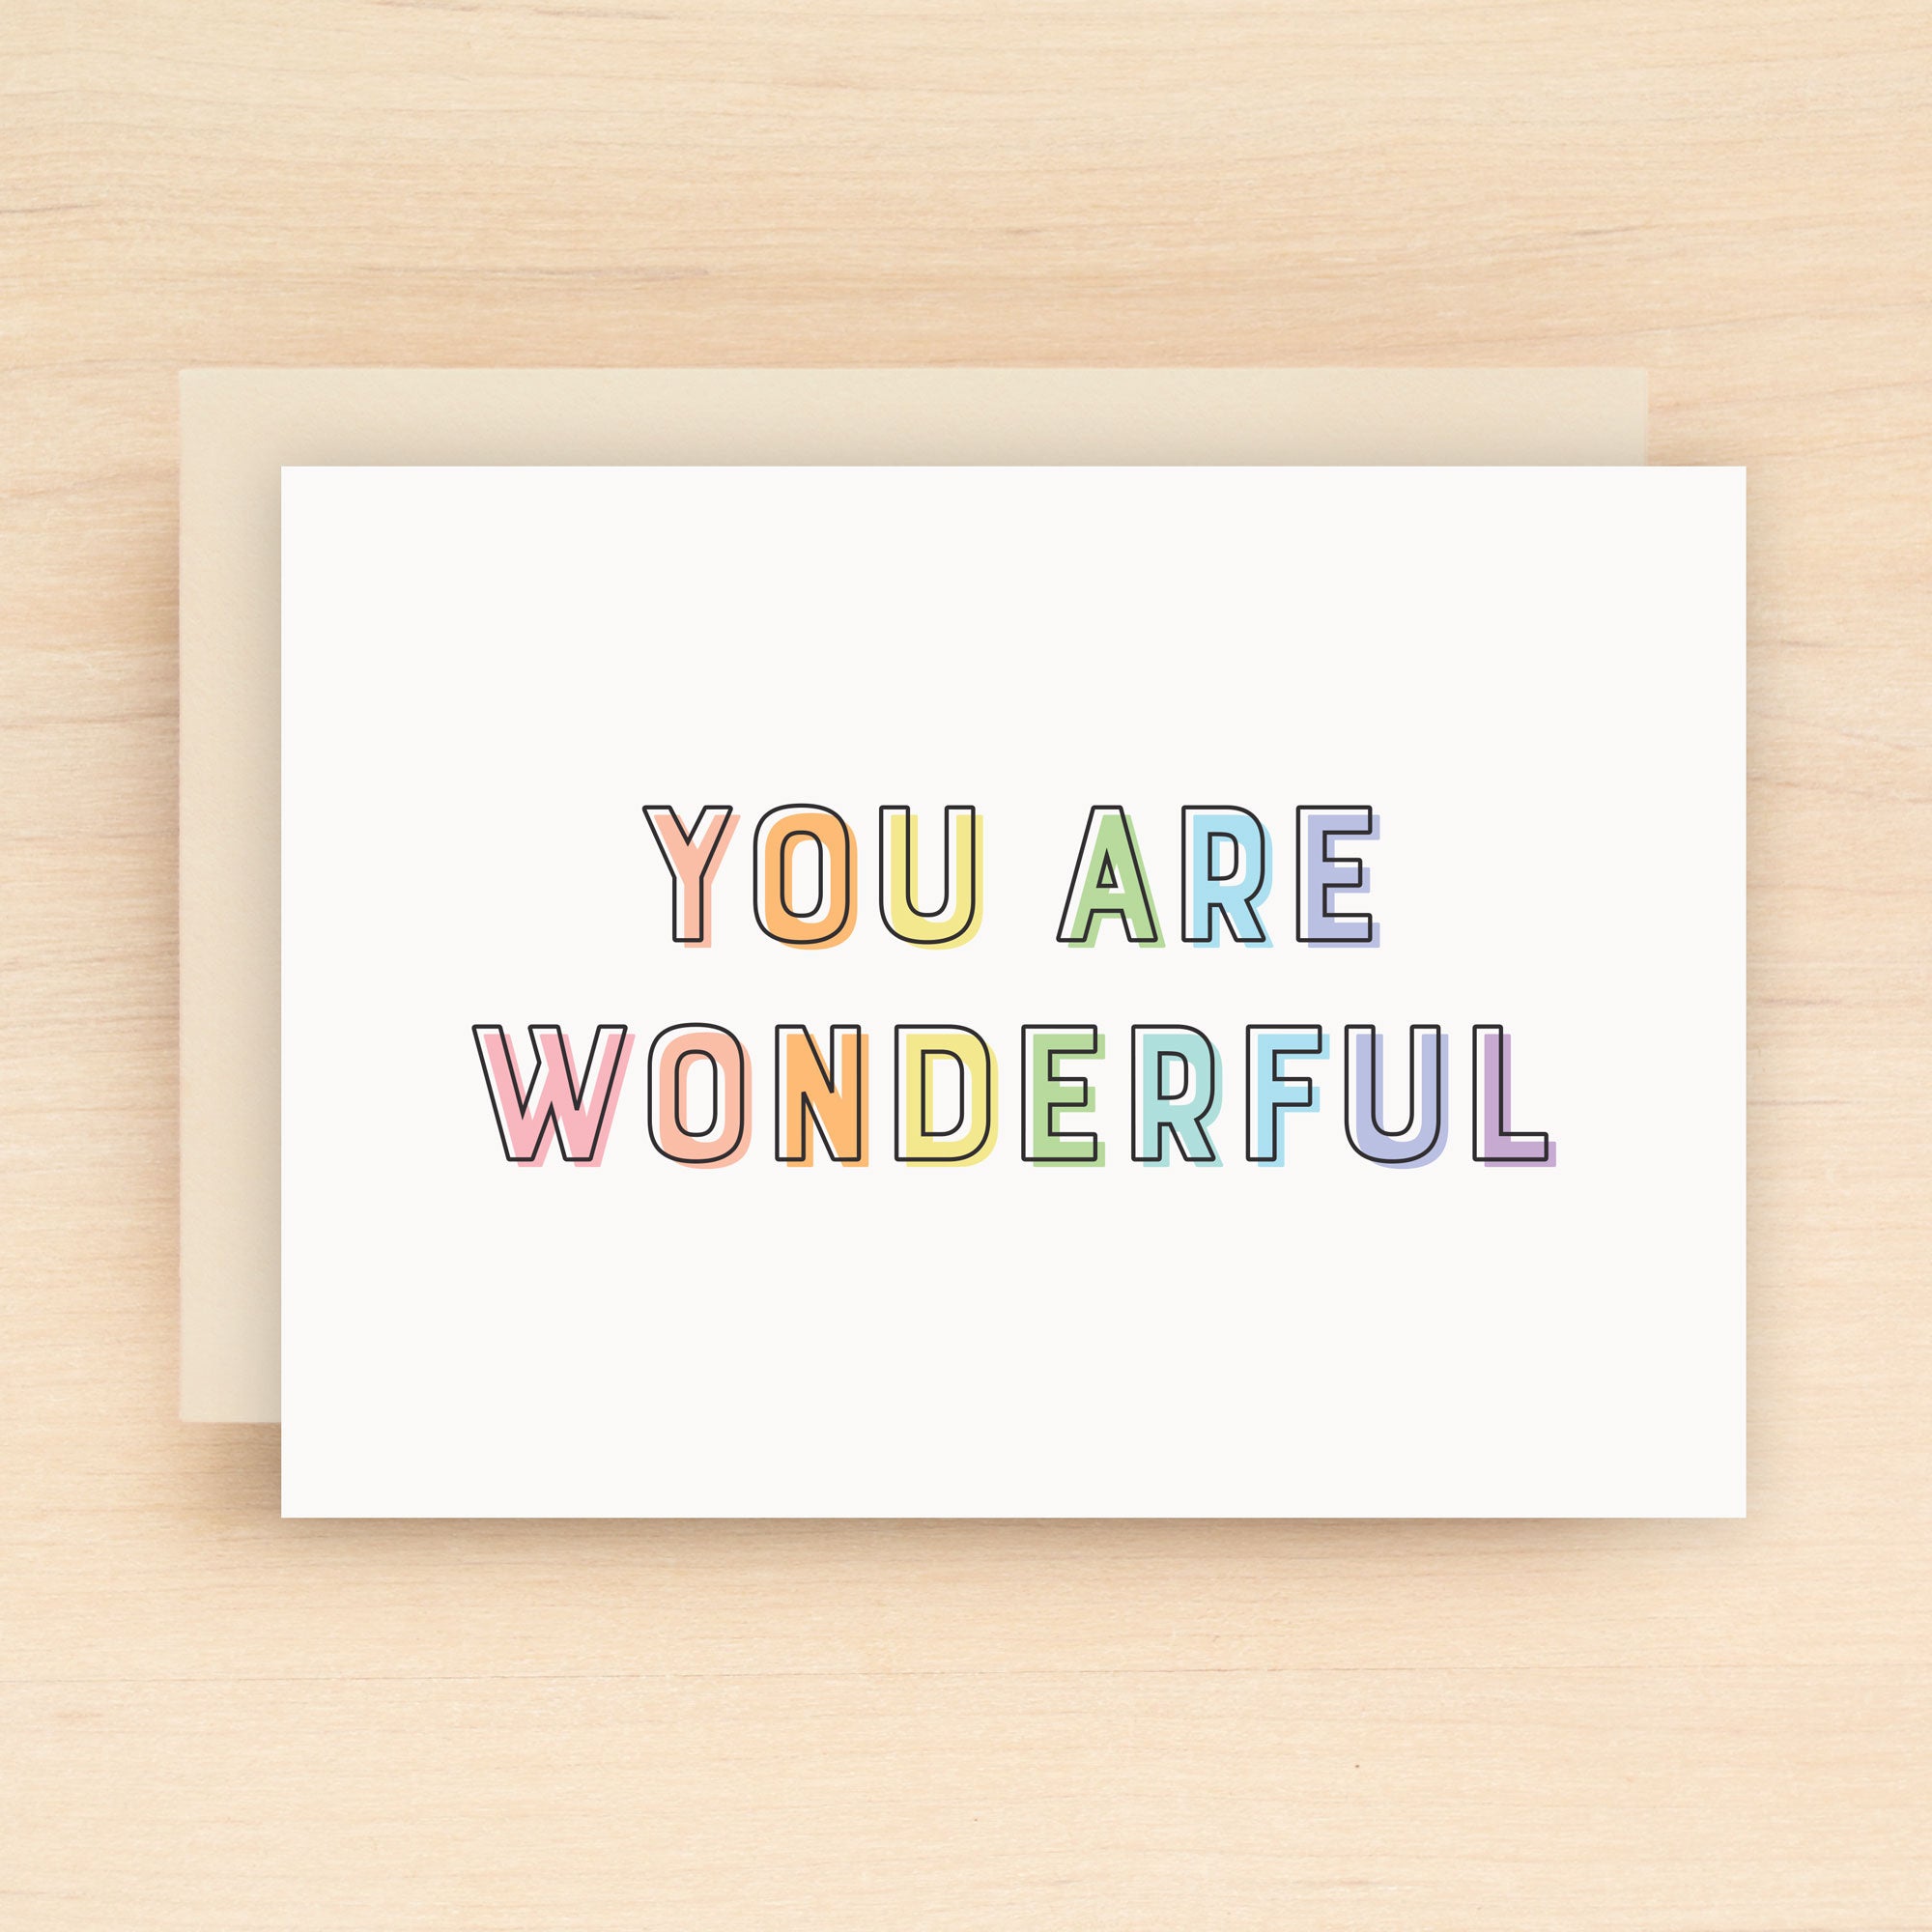 "You are wonderful" Wonderful Greeting Card #267